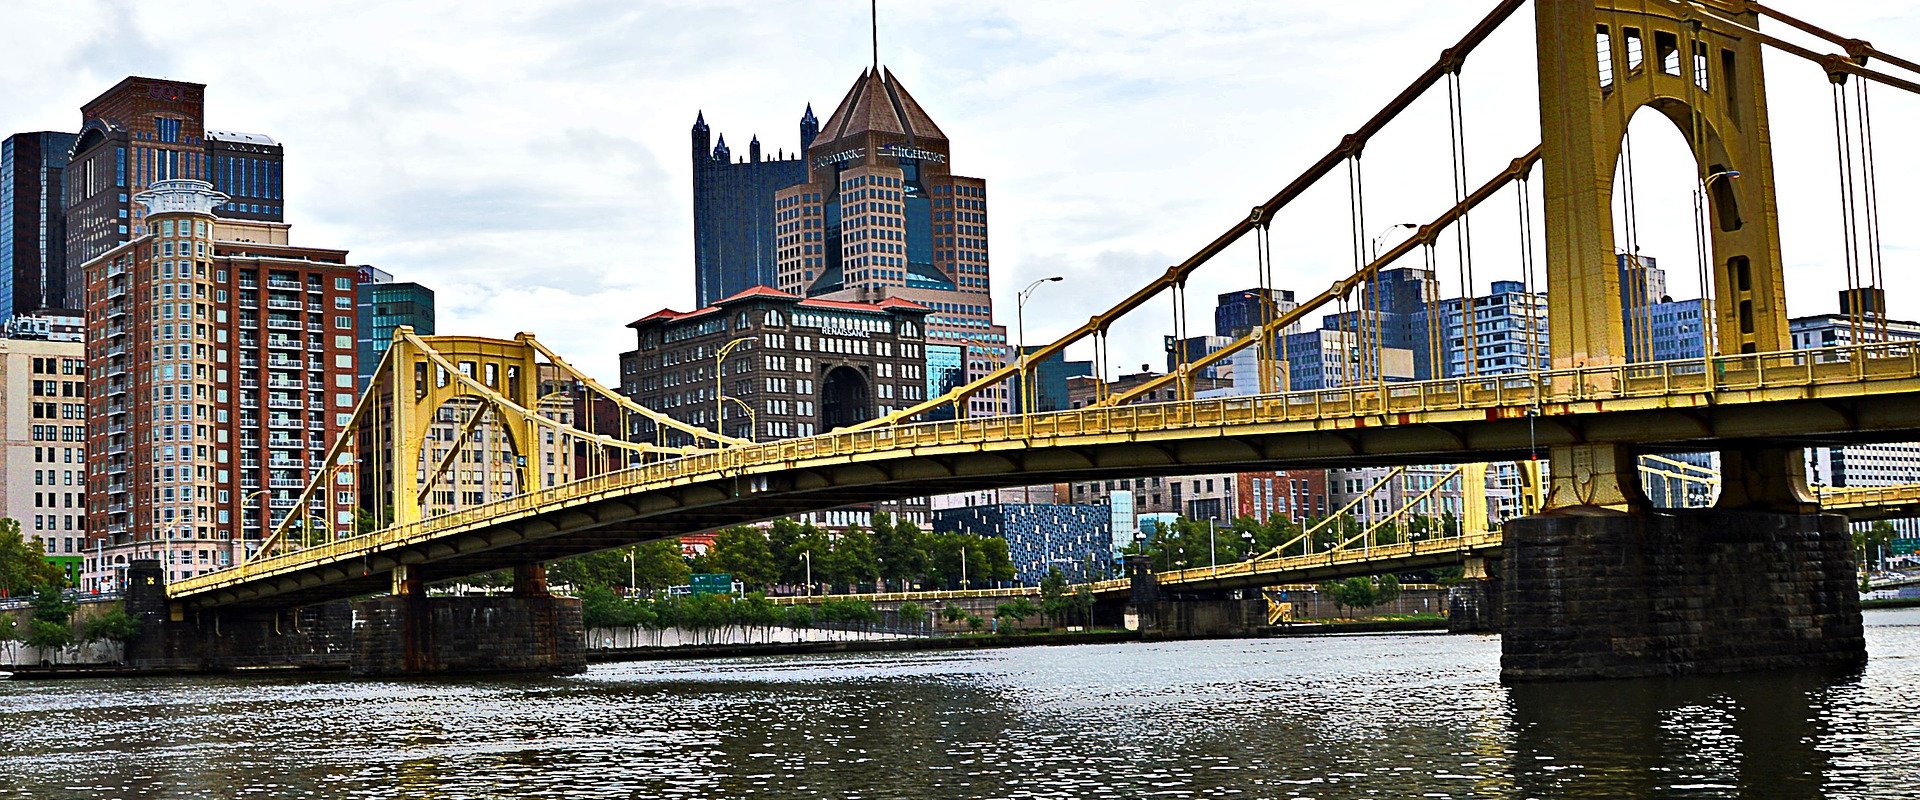 We Buy Houses Pittsburgh Pennsylvania - Sell My House Fast Pittsburgh Pennsylvania